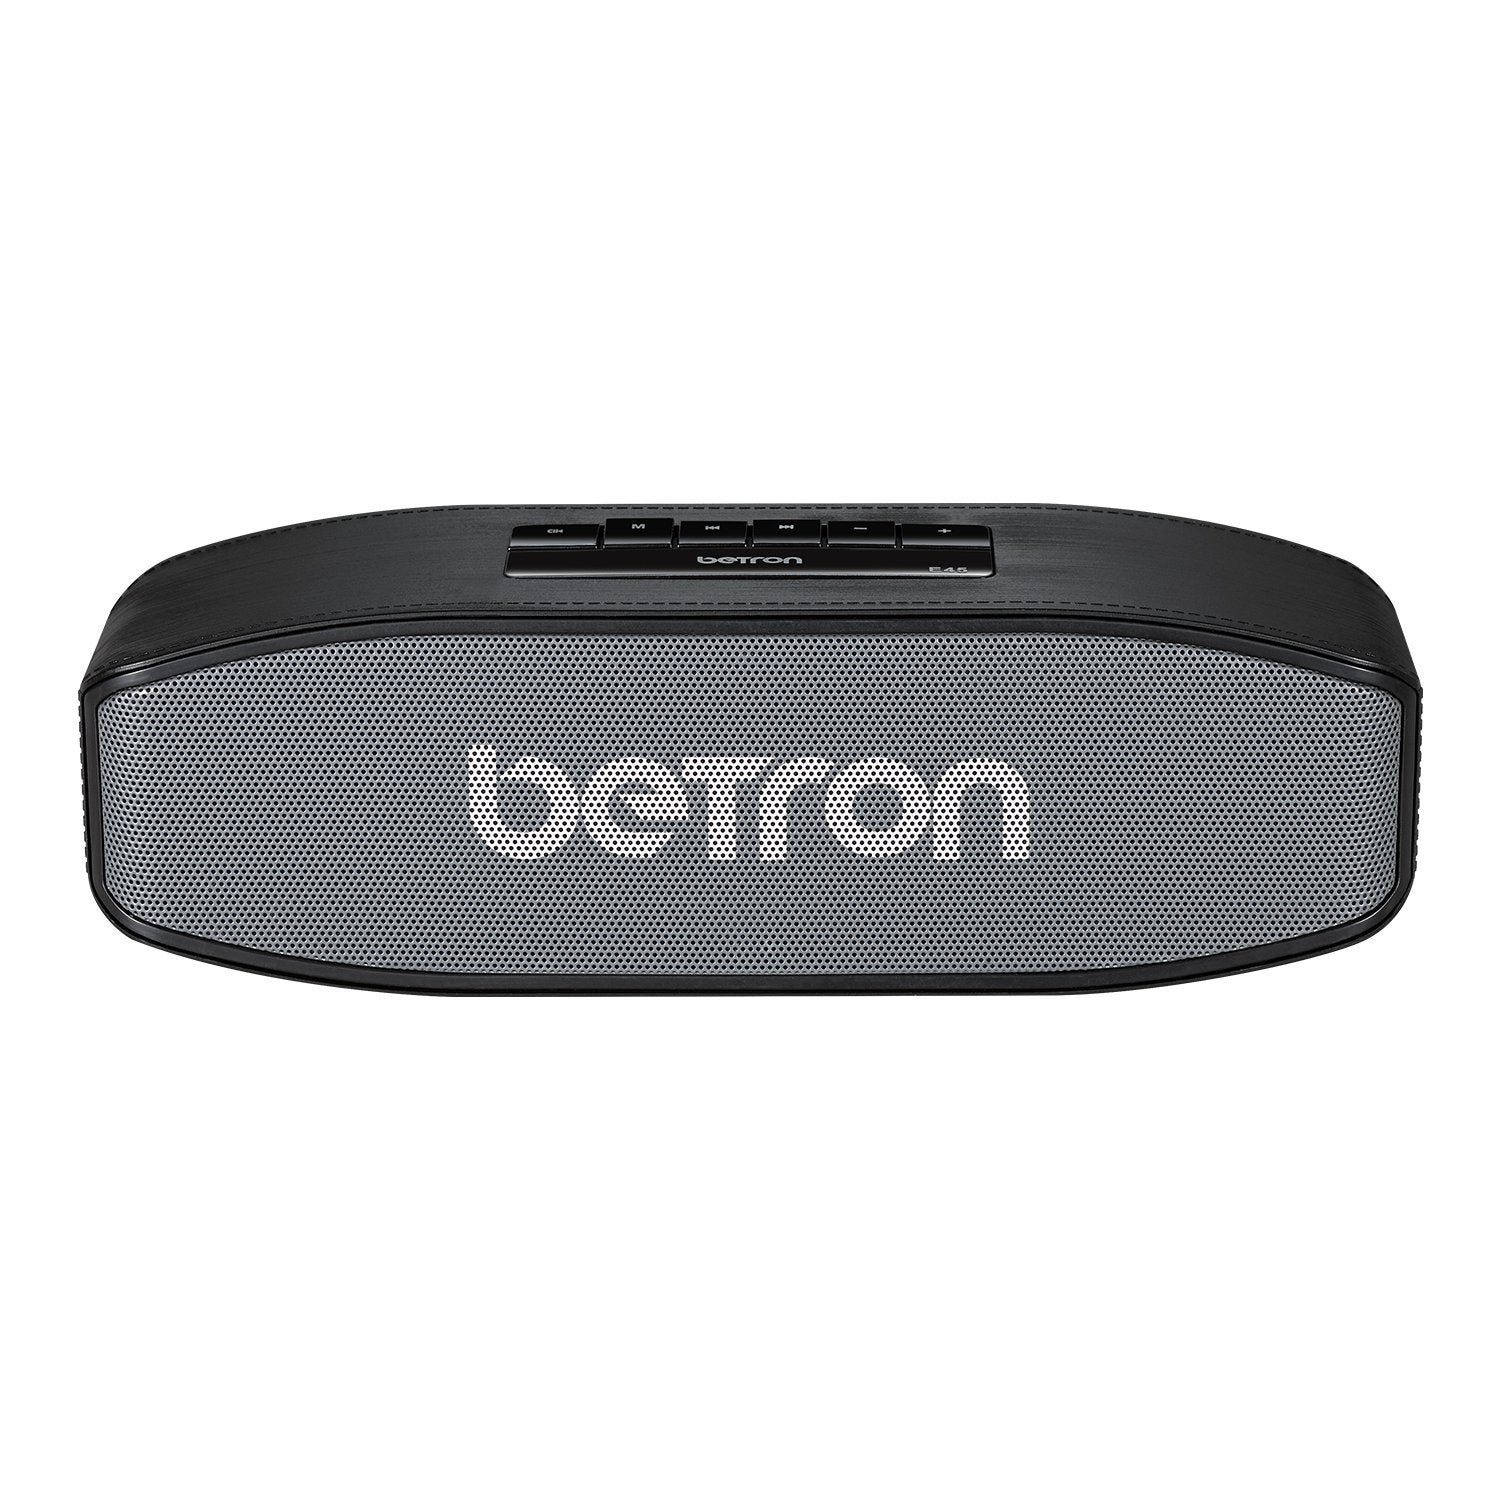 Betron E45 Portable Speaker